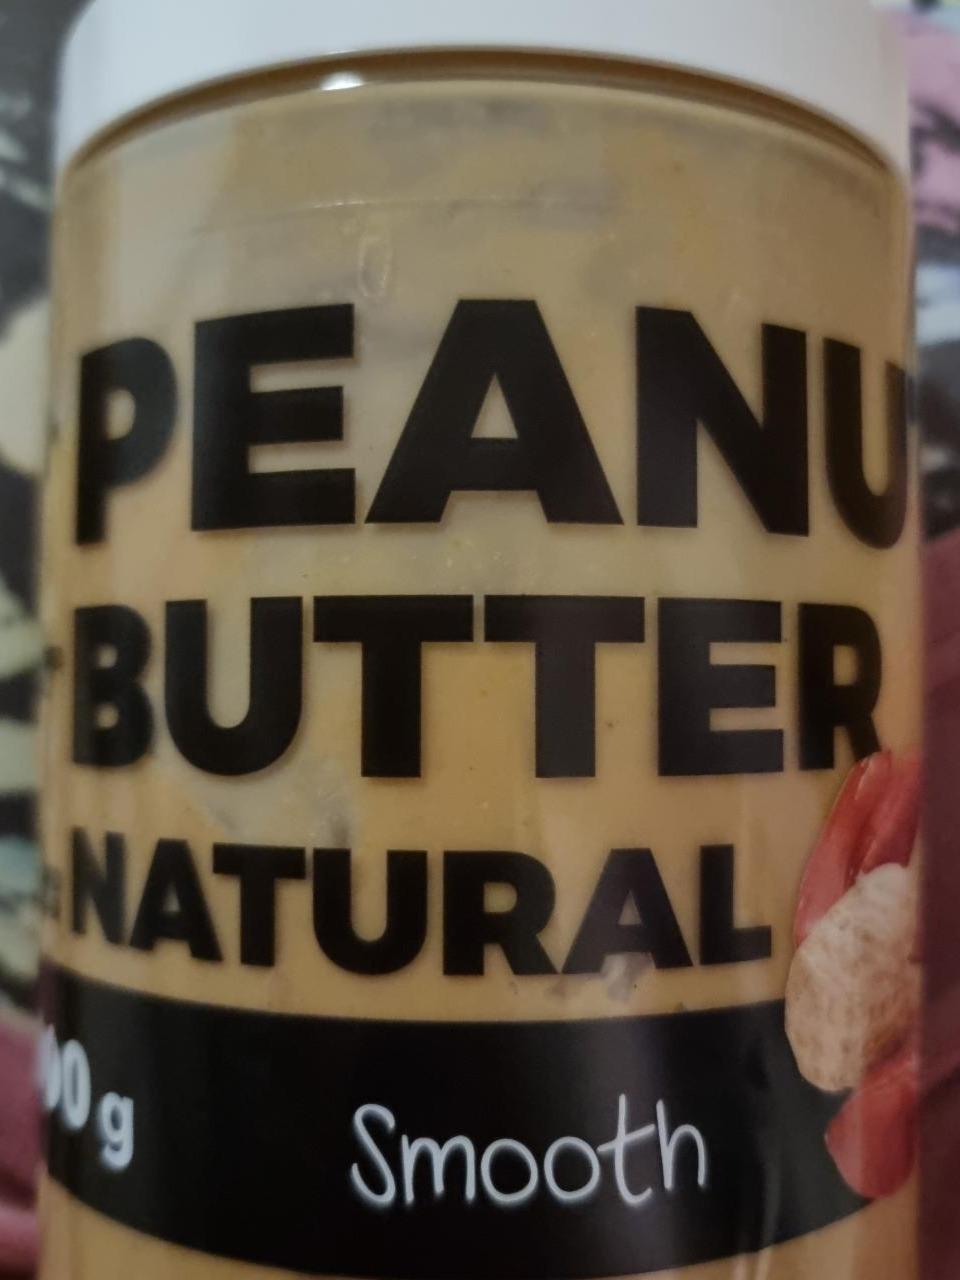 Zdjęcia - Peanut Butter Natural Smooth 7Nutrition